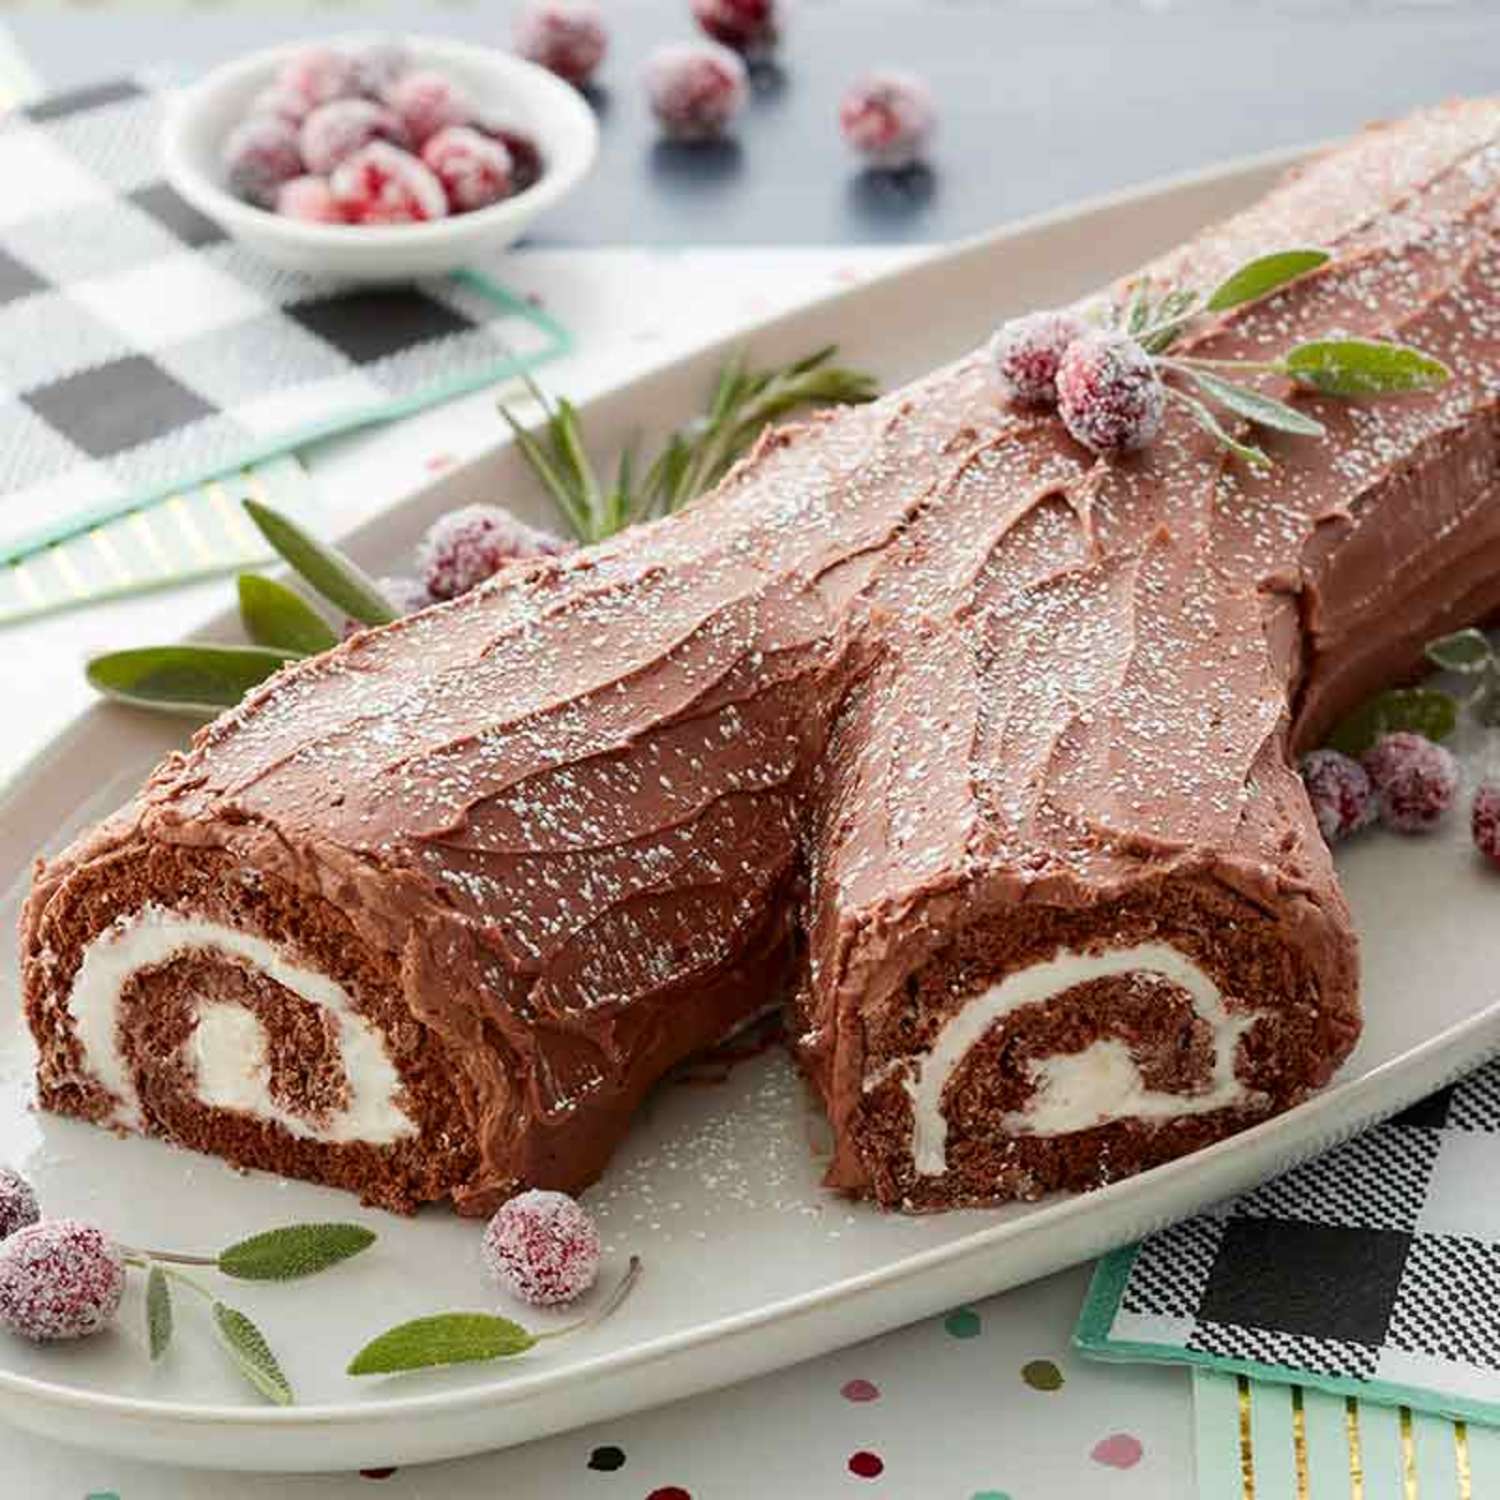 Chocolate Yule Log Cake (Bûche de Noël)